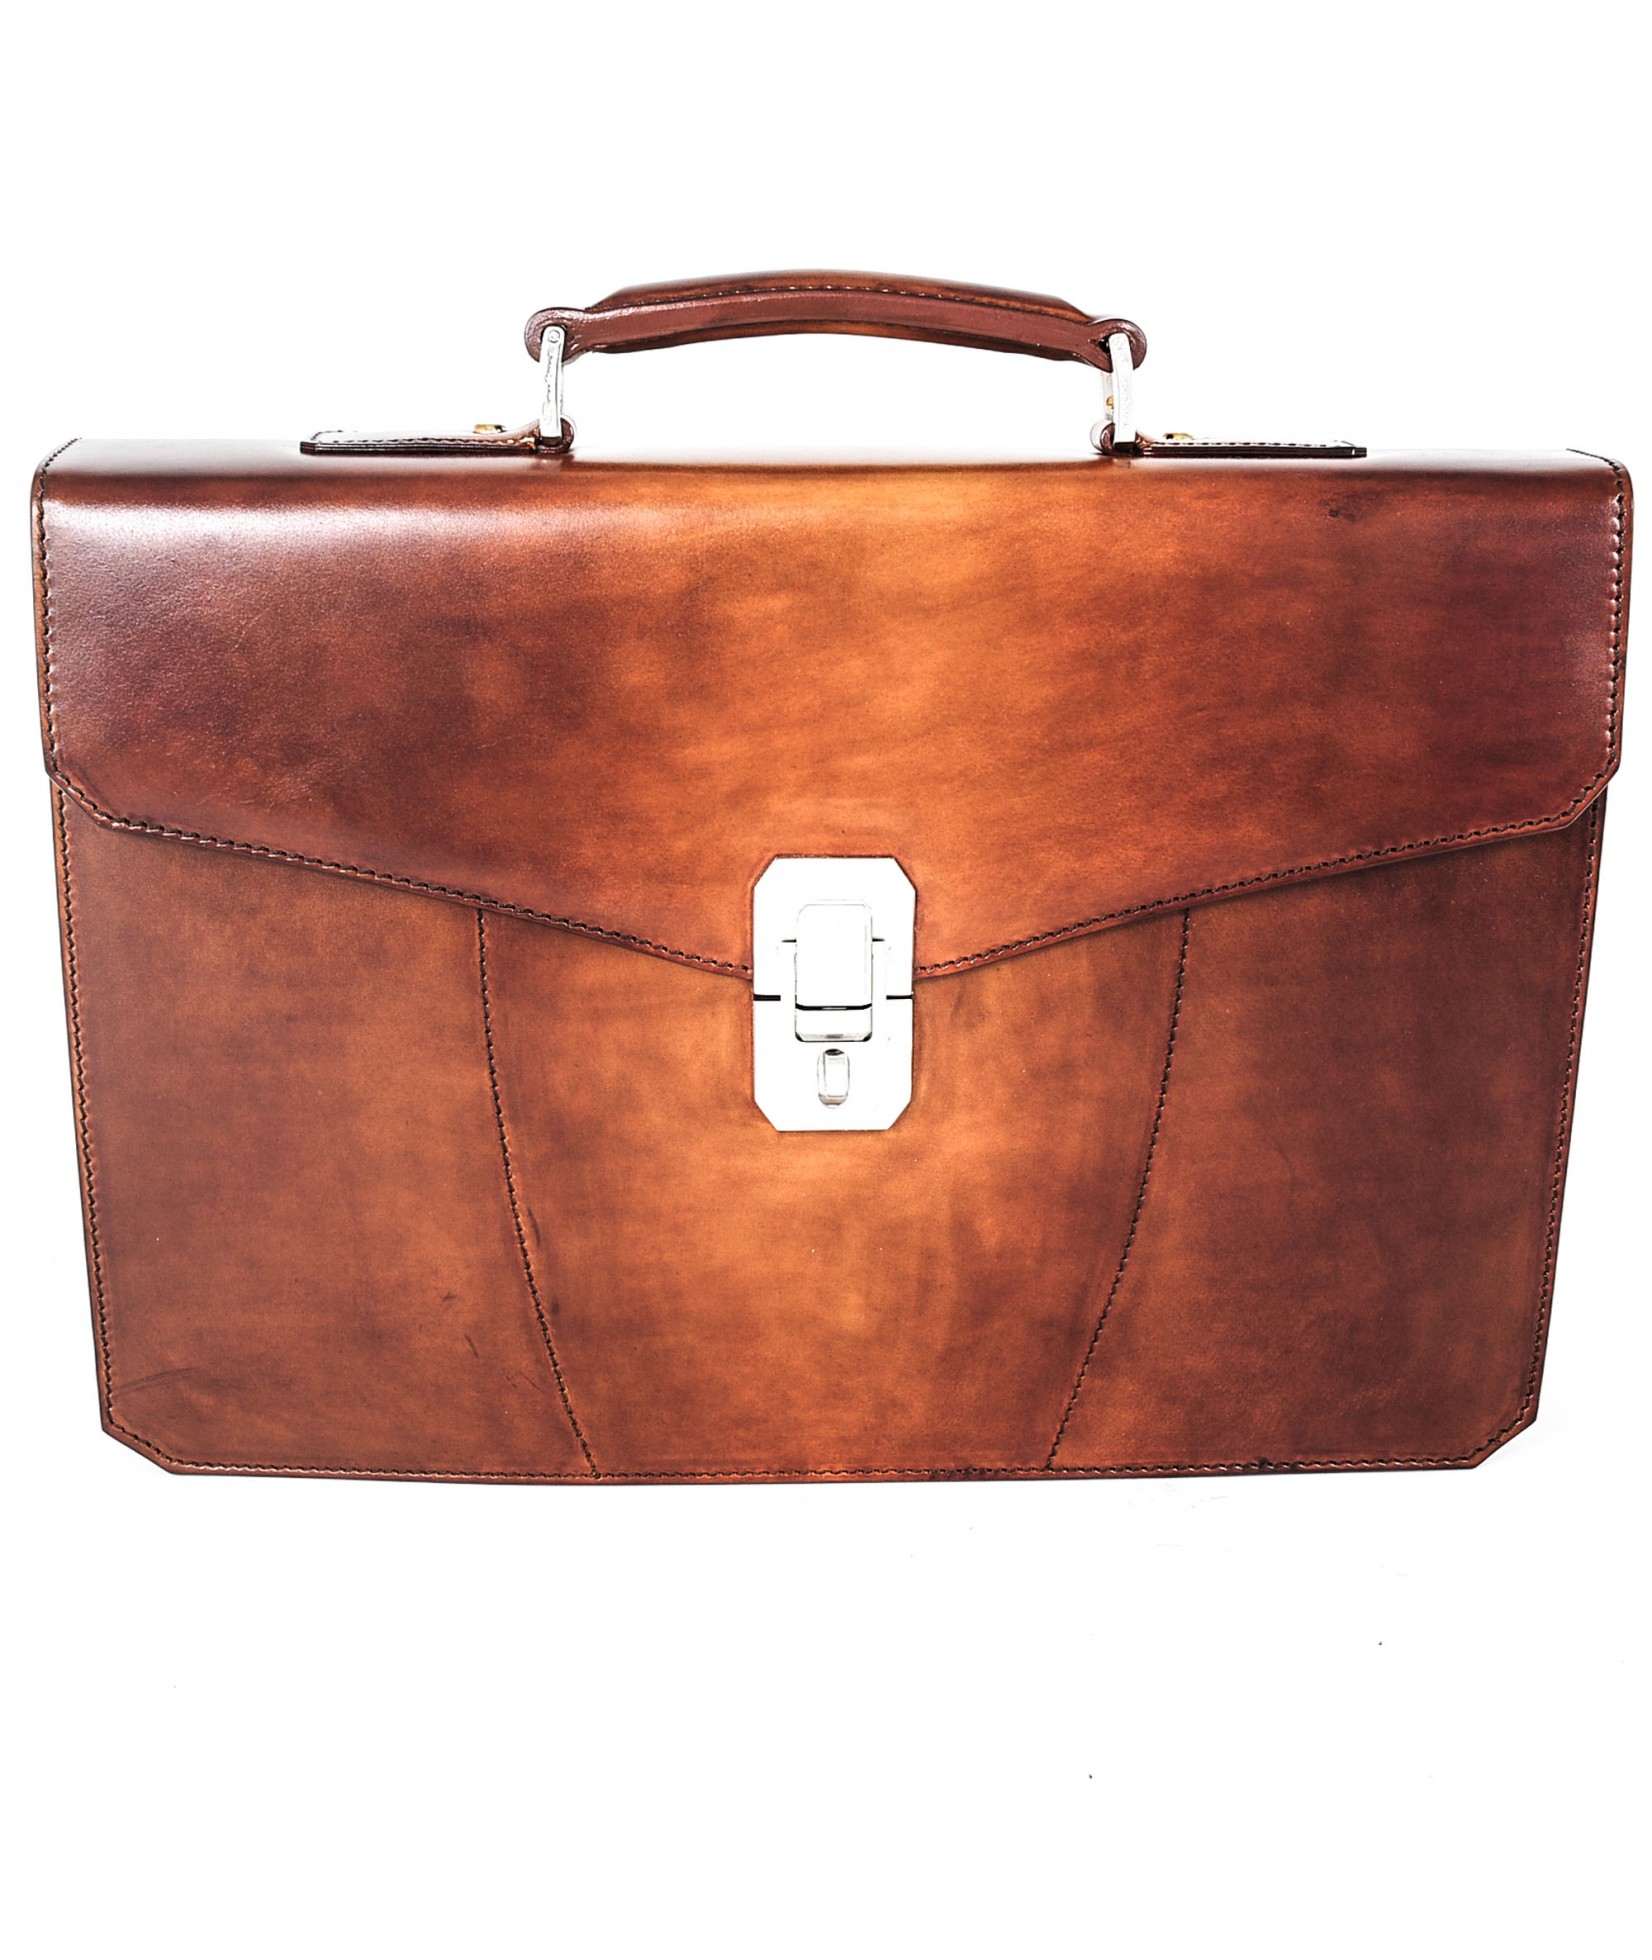 Santoni Office Bag Cognac (27810)